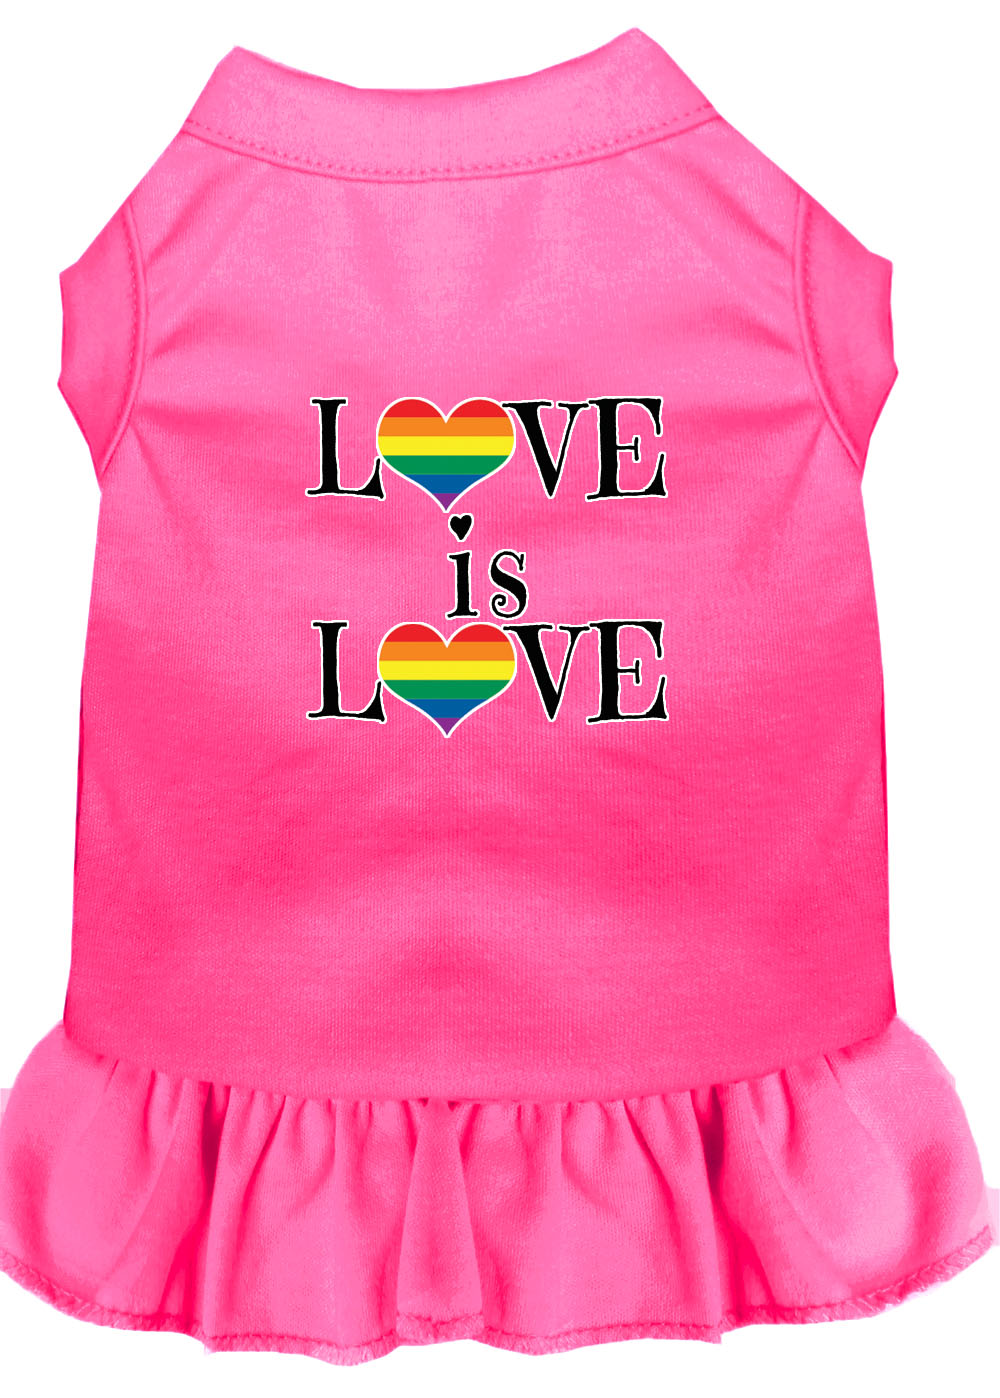 Love is Love Screen Print Dog Dress Bright Pink Lg